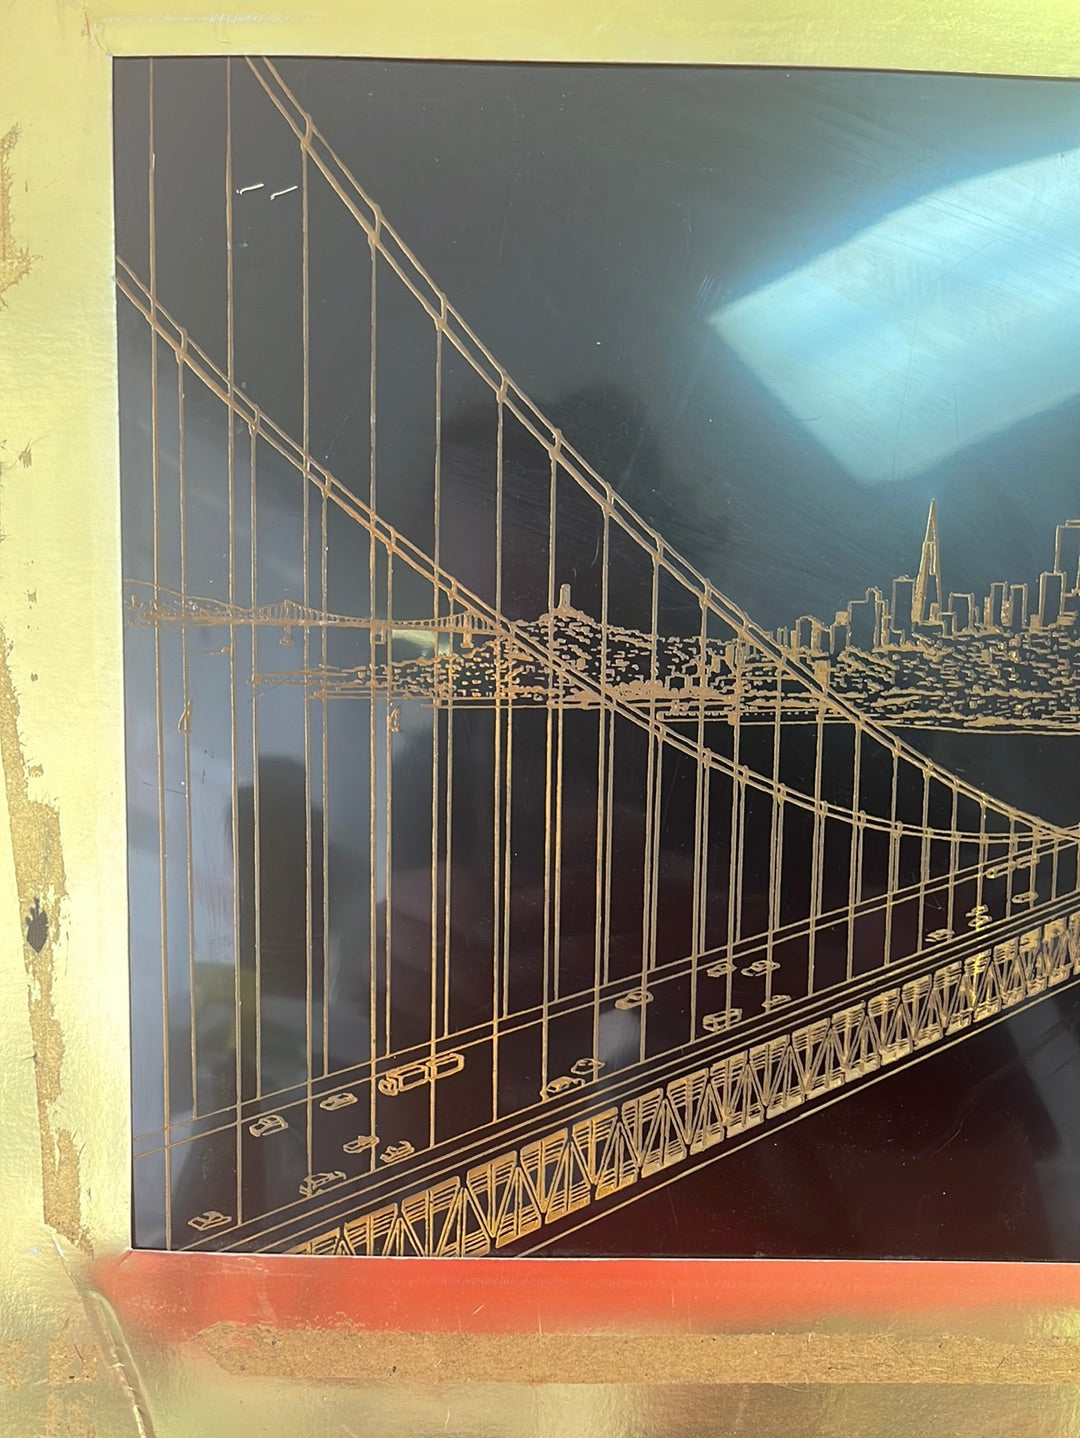 VTG -- Paul van de Pol Hand-Rubbed Brass Etching of the Golden Gate Bridge